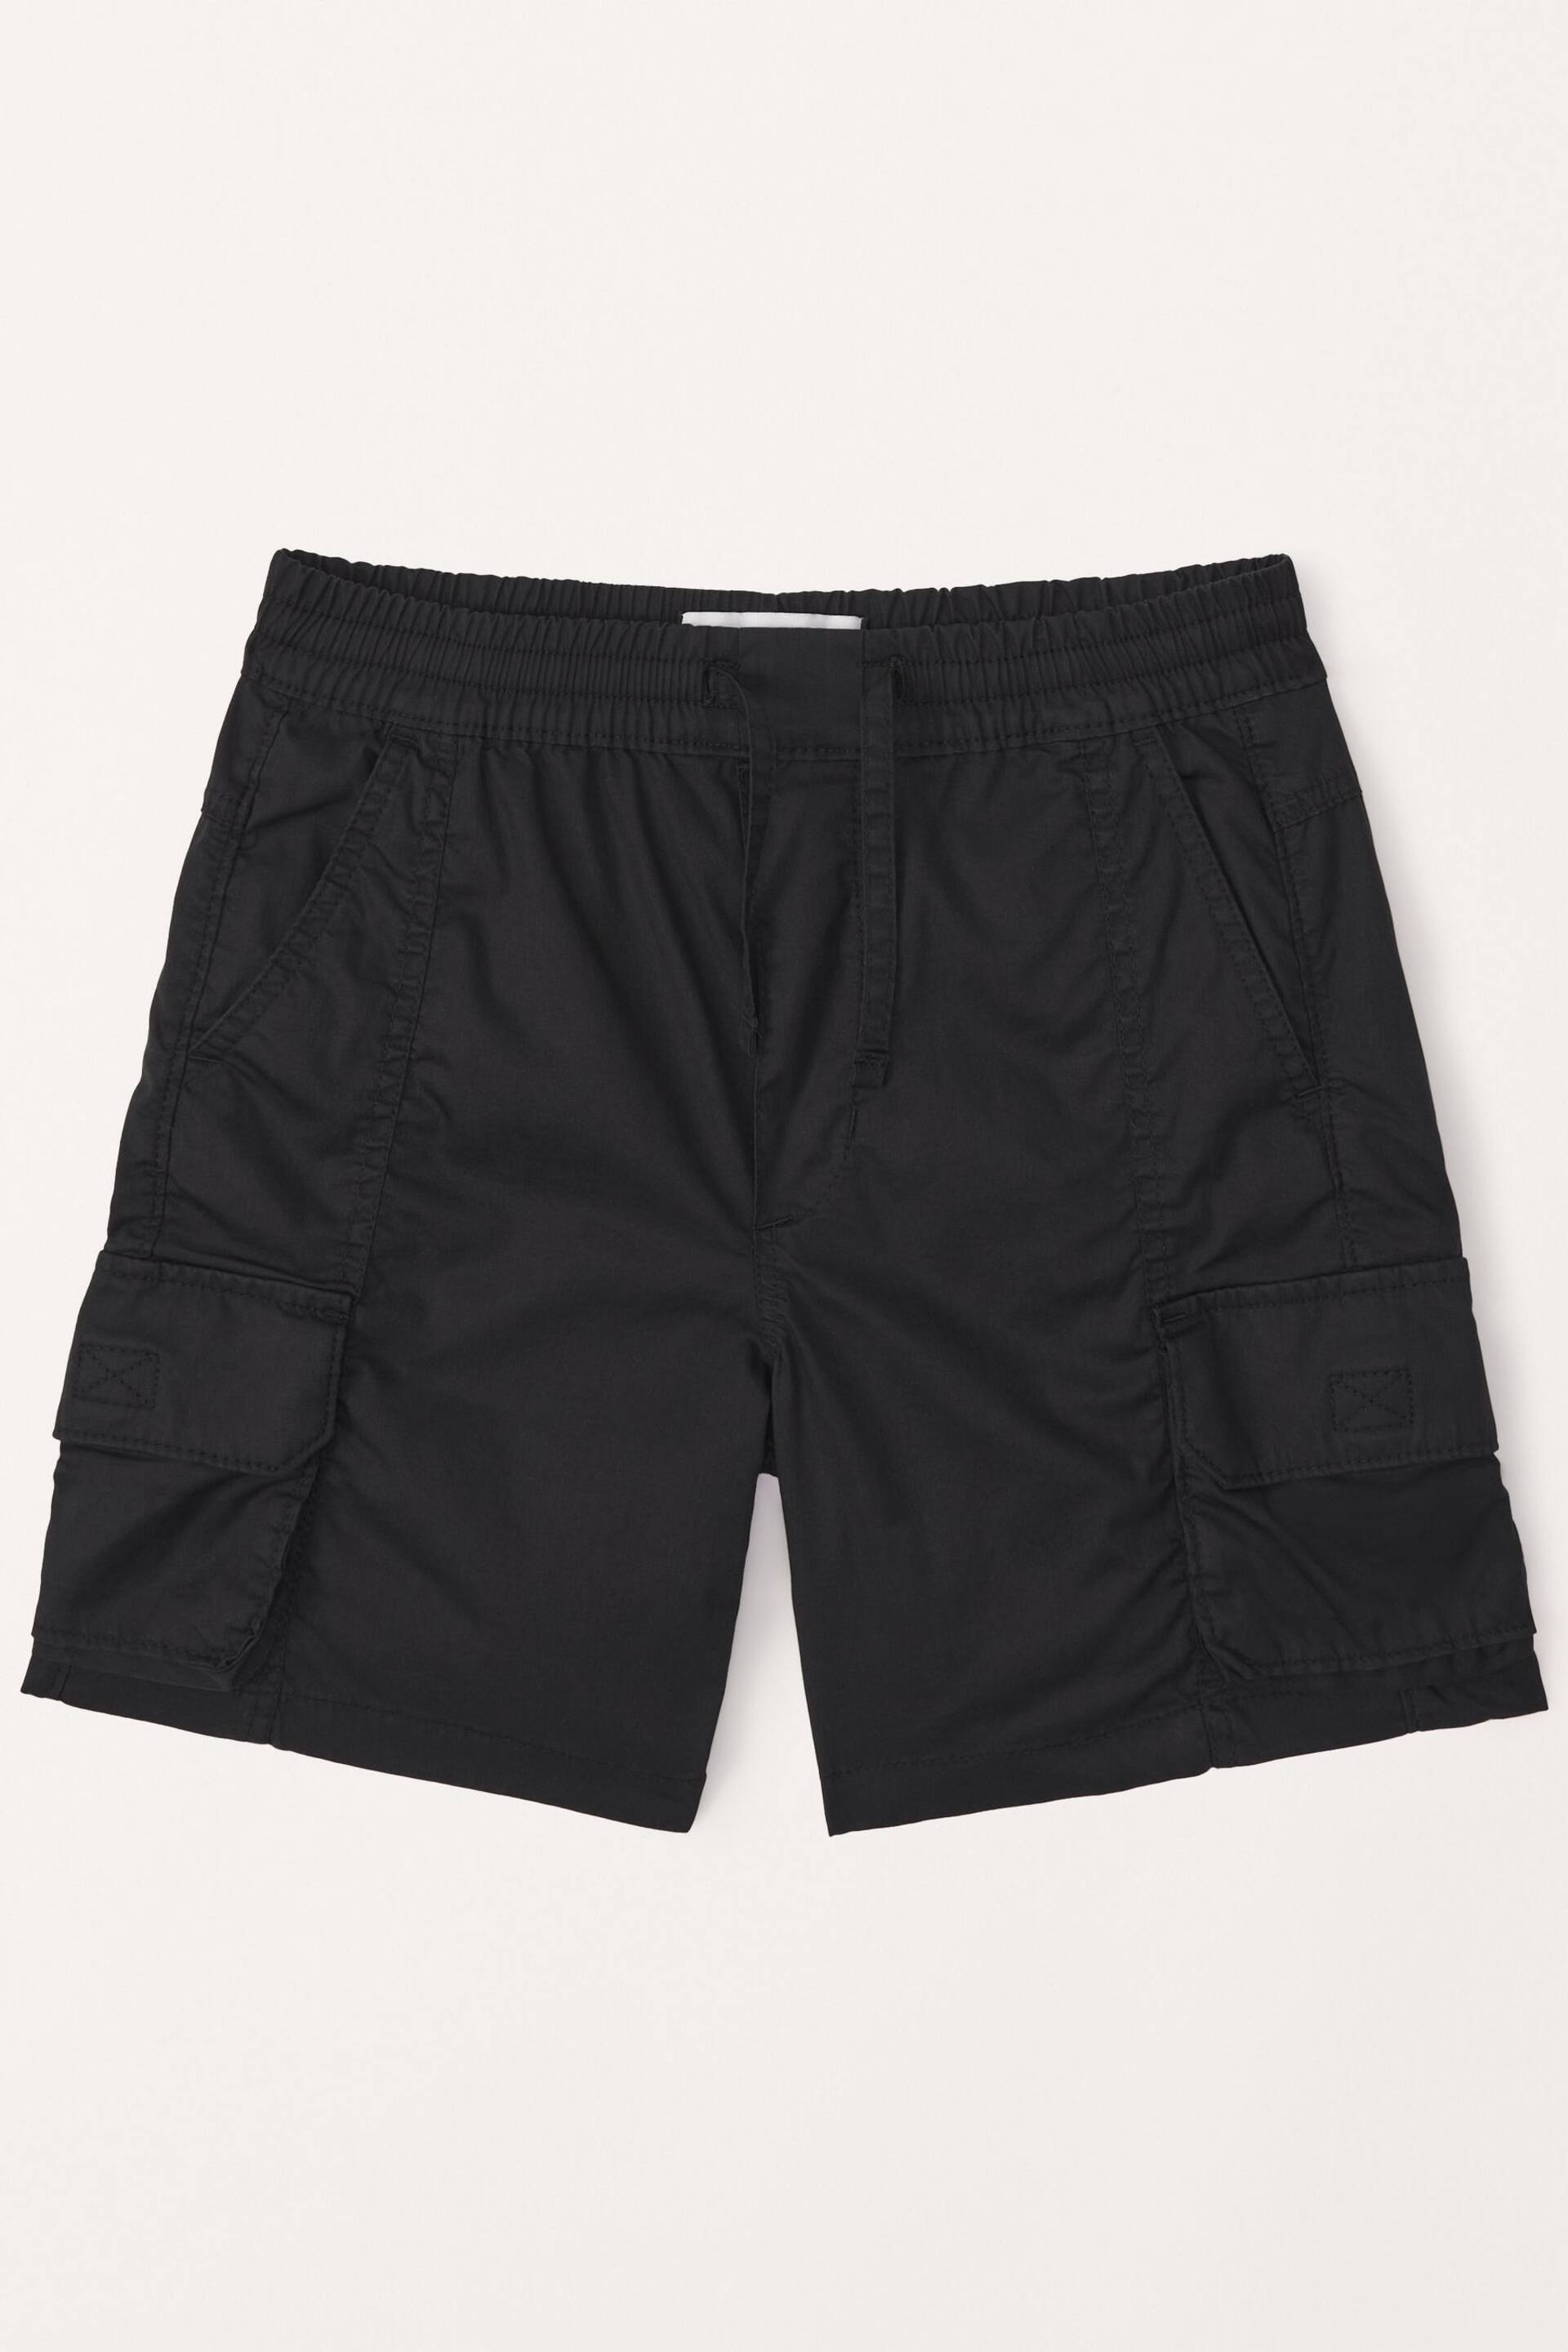 Abercrombie & Fitch Cargo Utility Black Shorts - Image 1 of 2